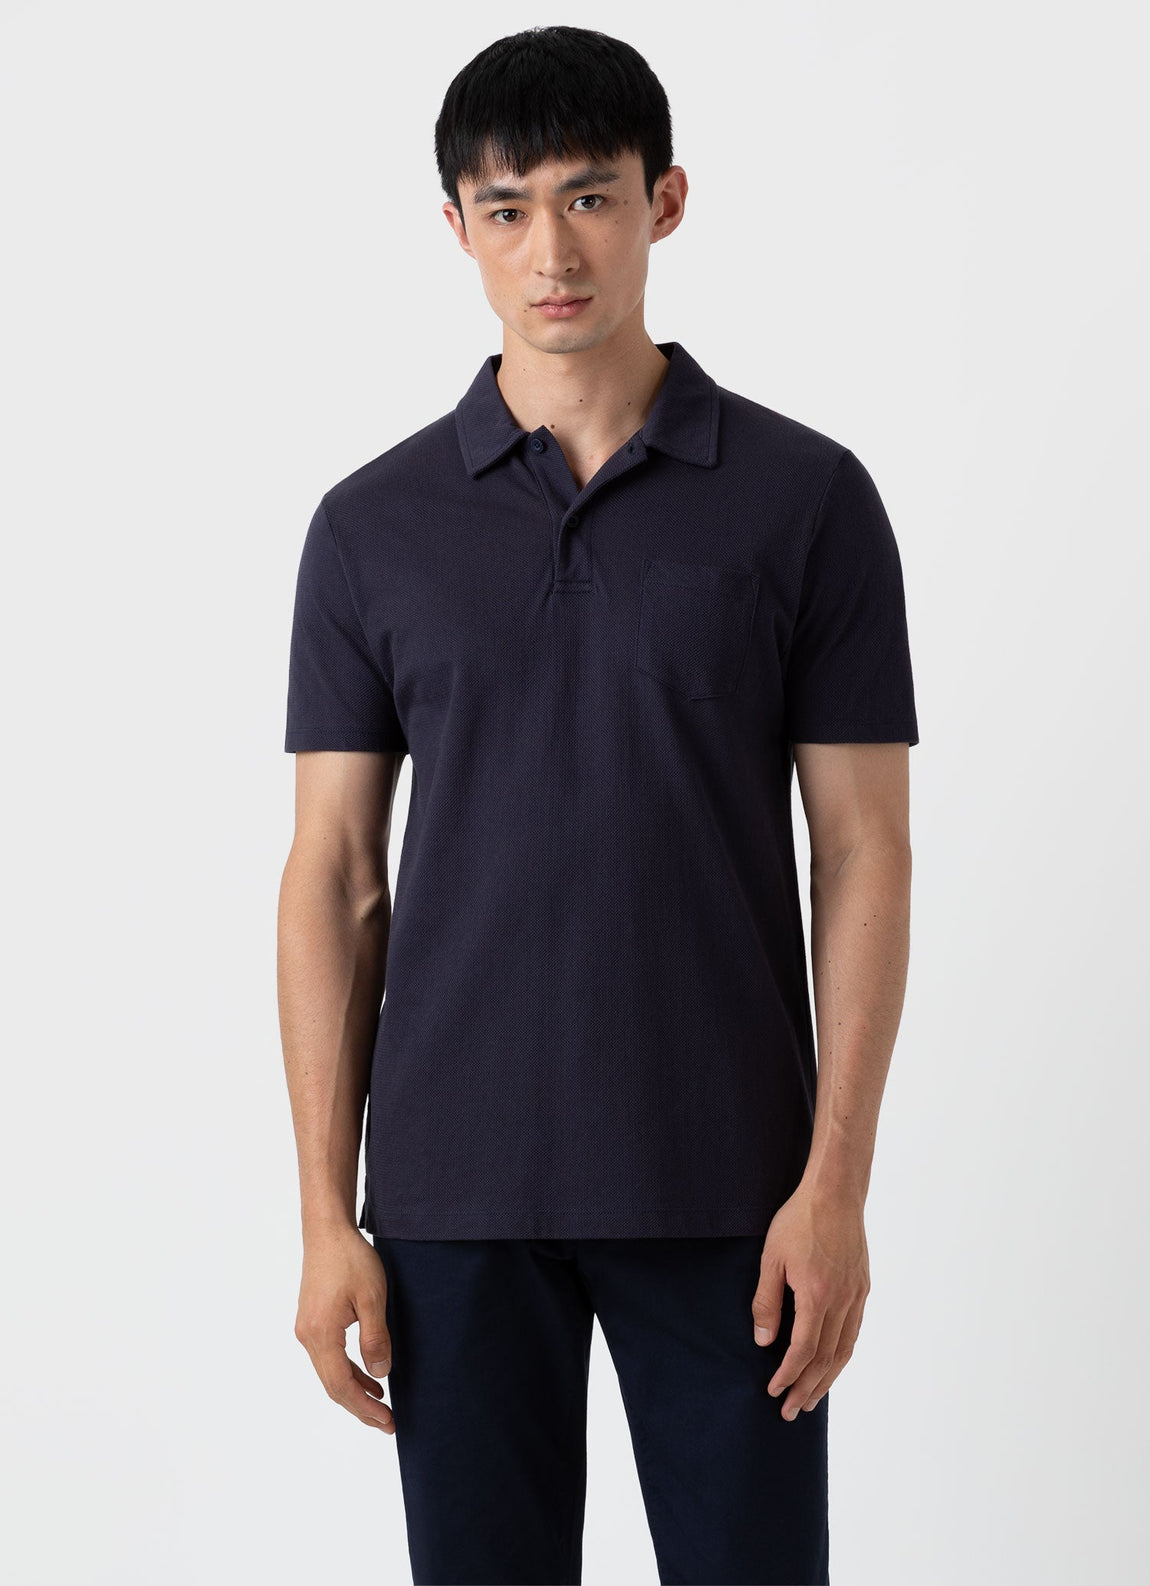 Men's Riviera Polo Shirt in Navy